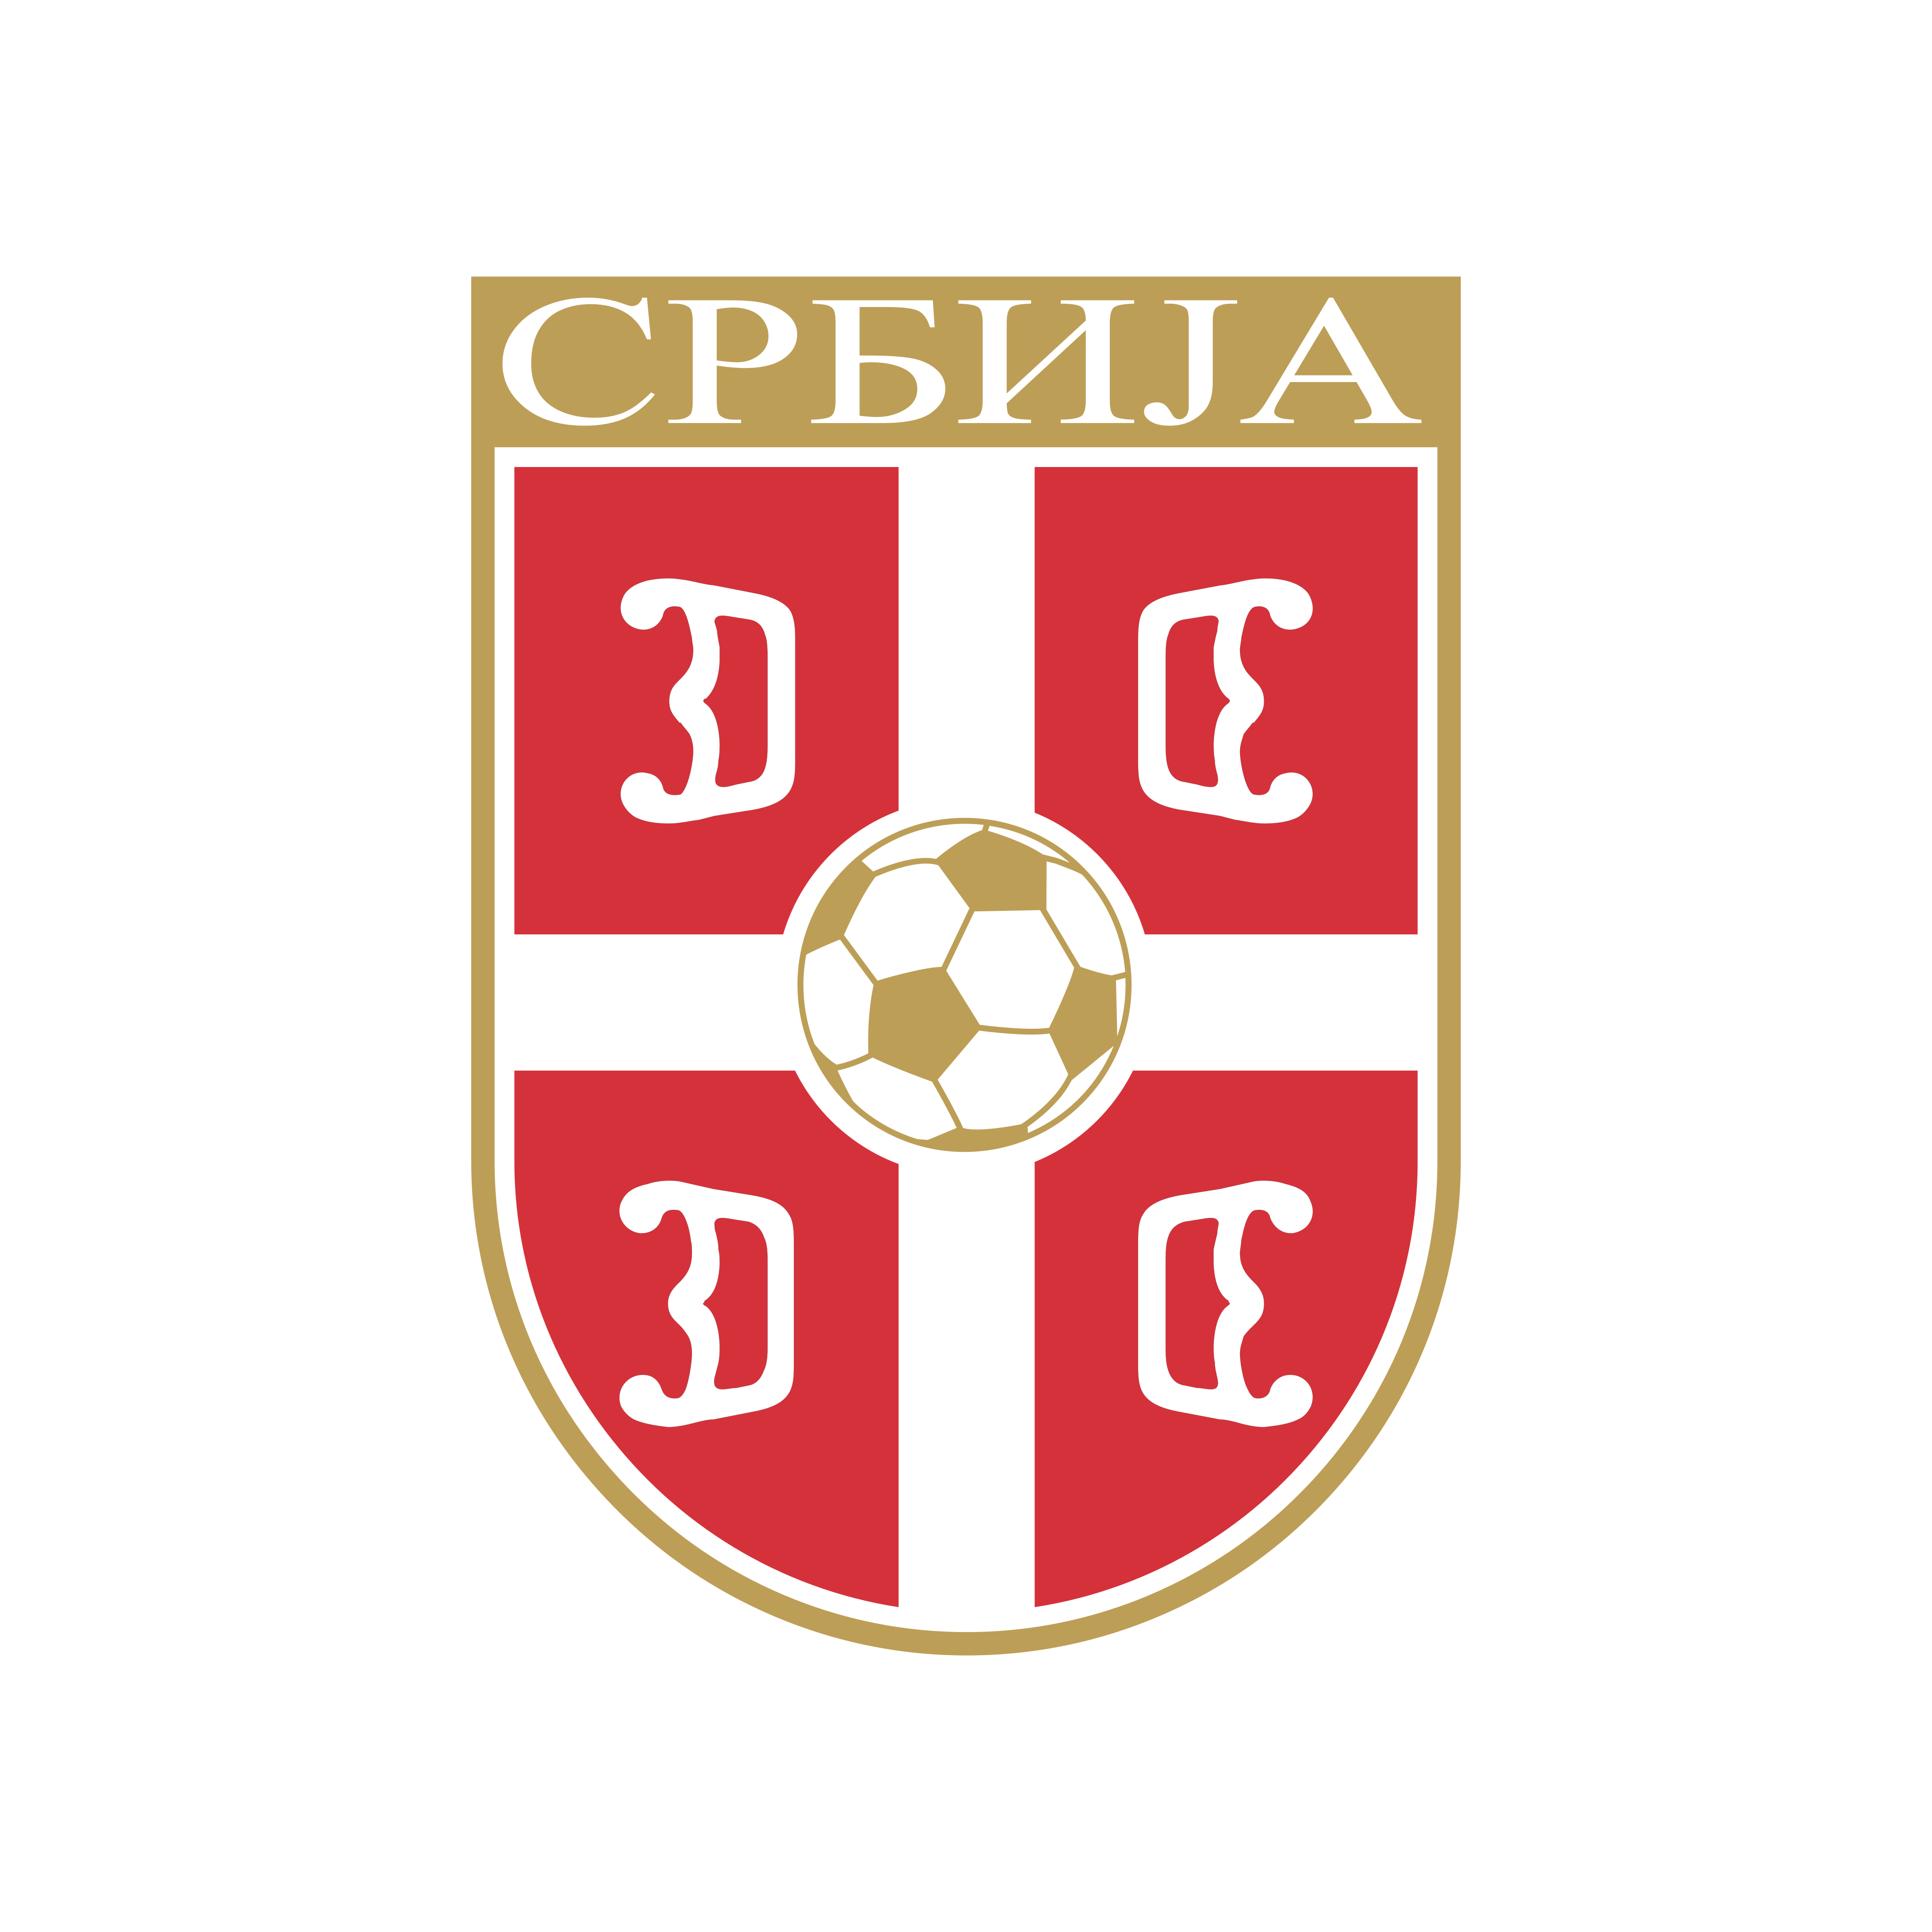 serbia national football team logo 0 - Serbia National Football Team Logo